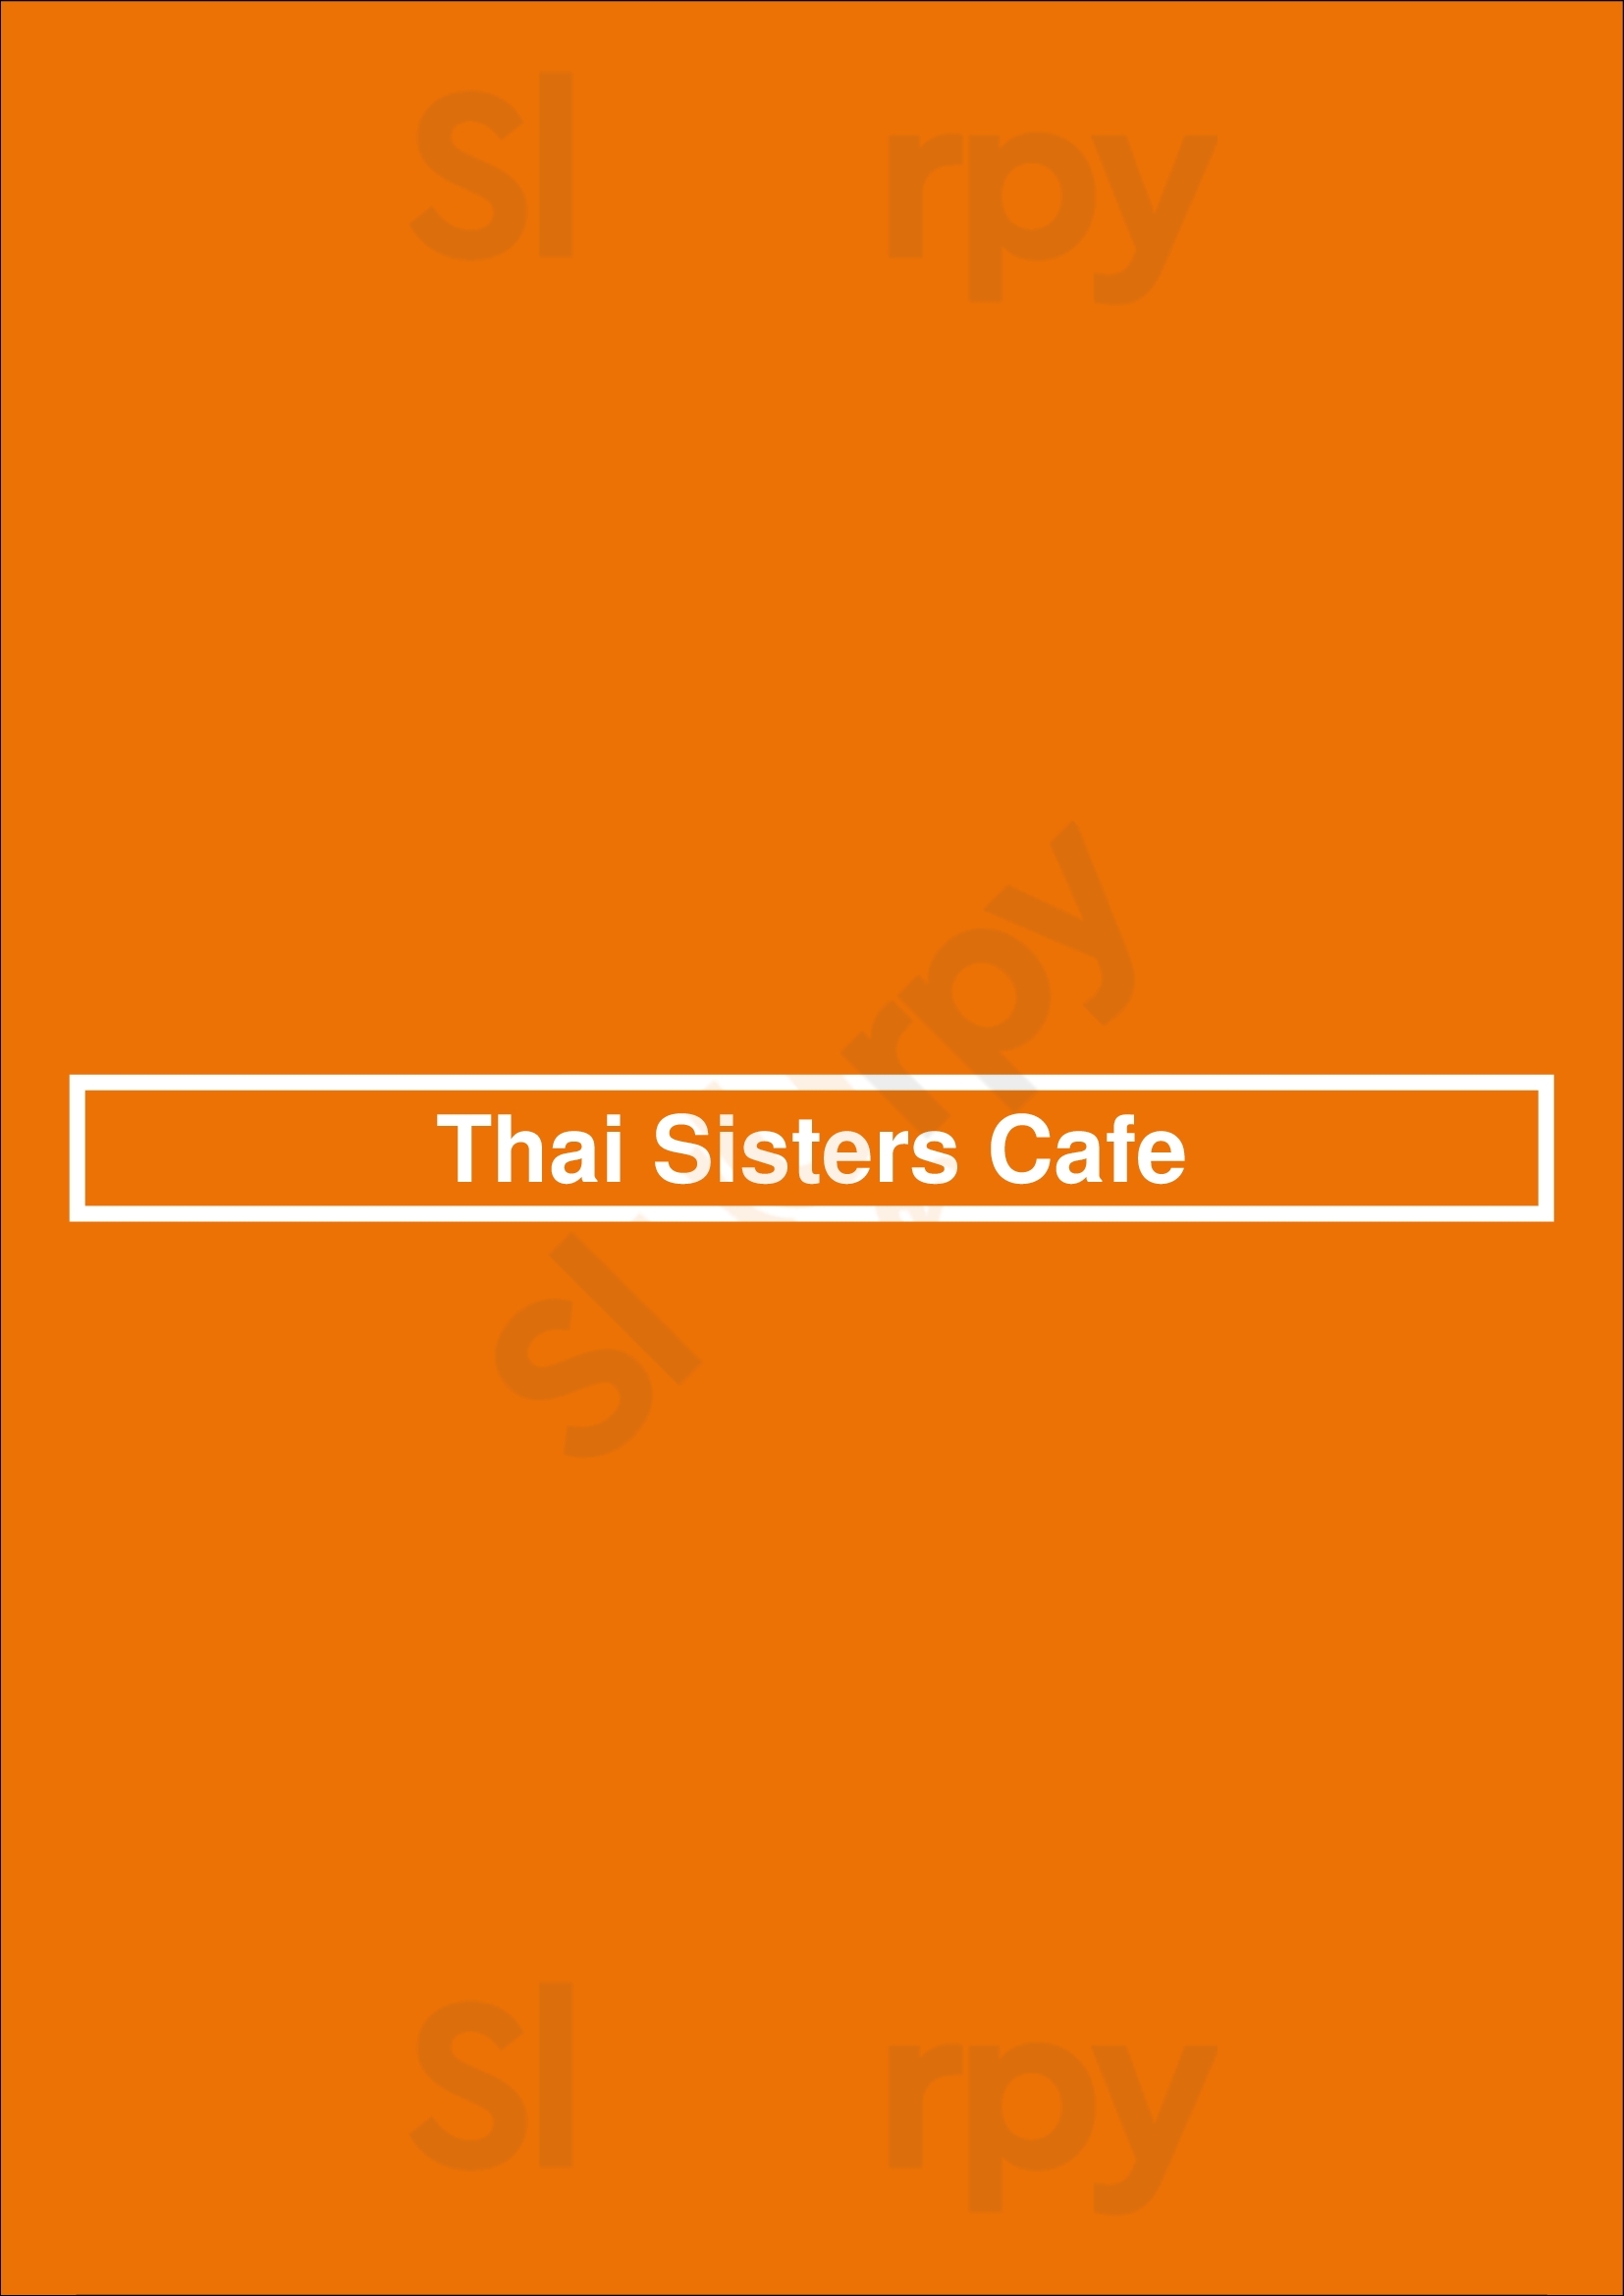 Thai Sisters Cafe London Menu - 1